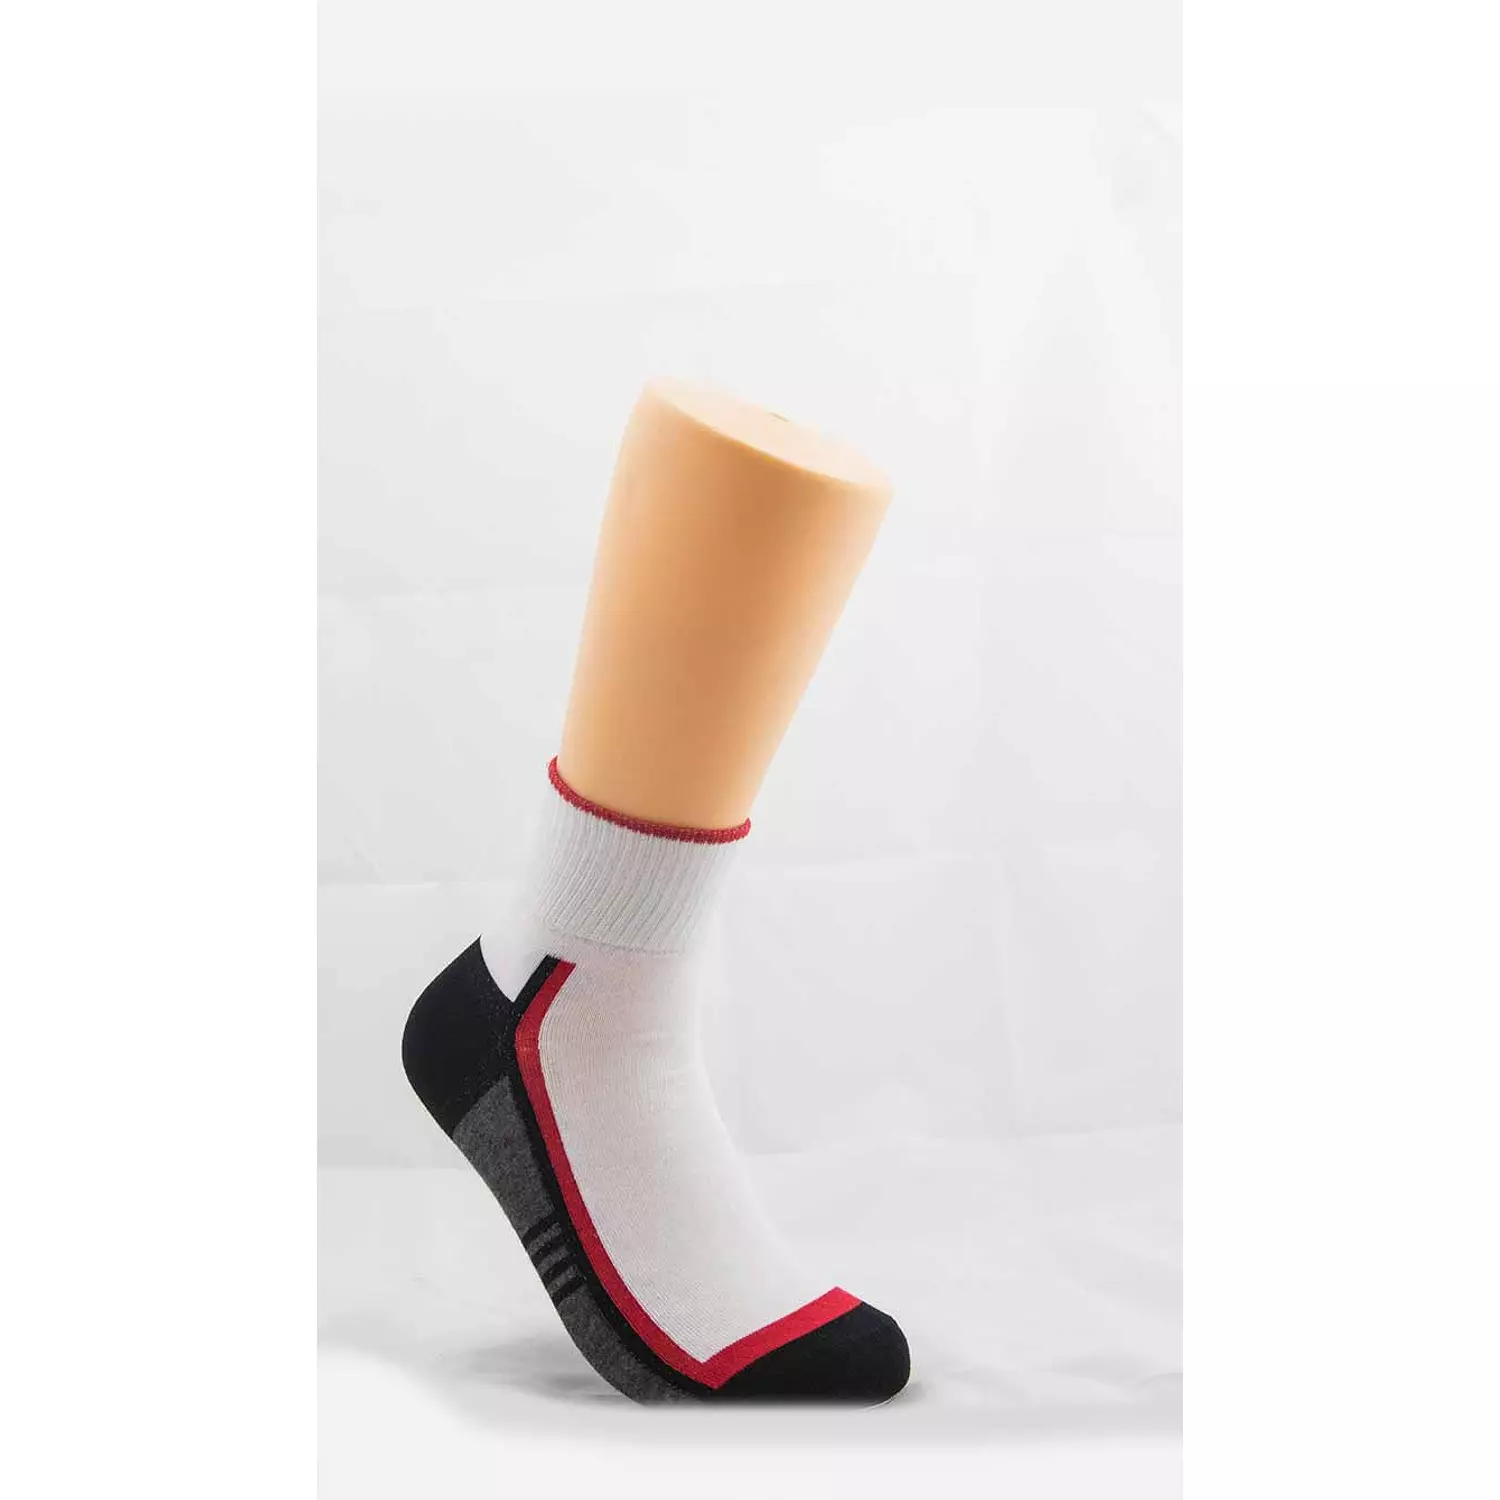  Viva half ( knee ) casual Socks for men's hover image